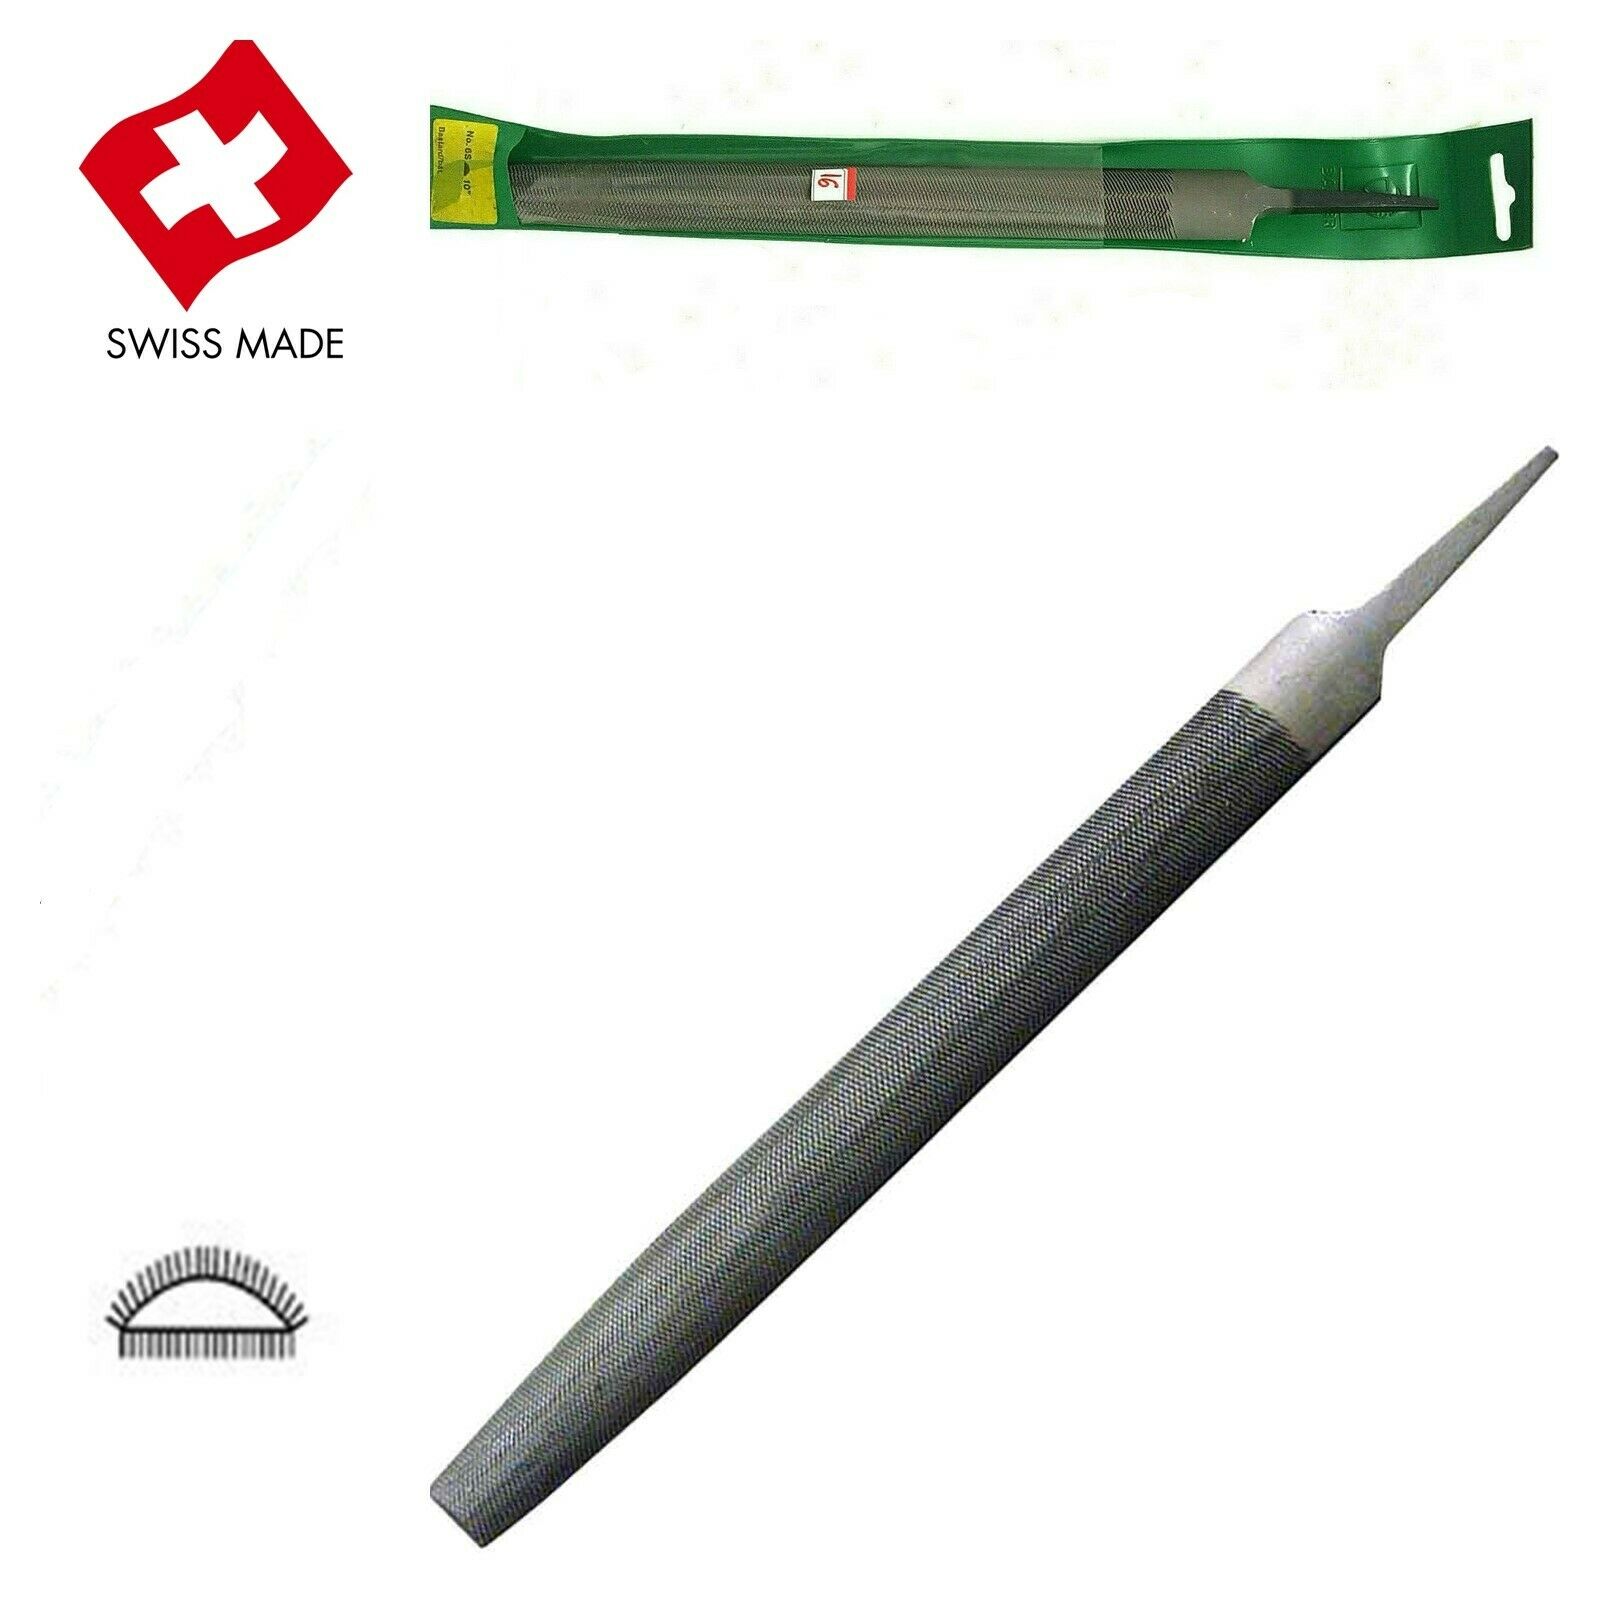 Baiter Swiss Needle File Half Round - 250mm 10" Long Now No16